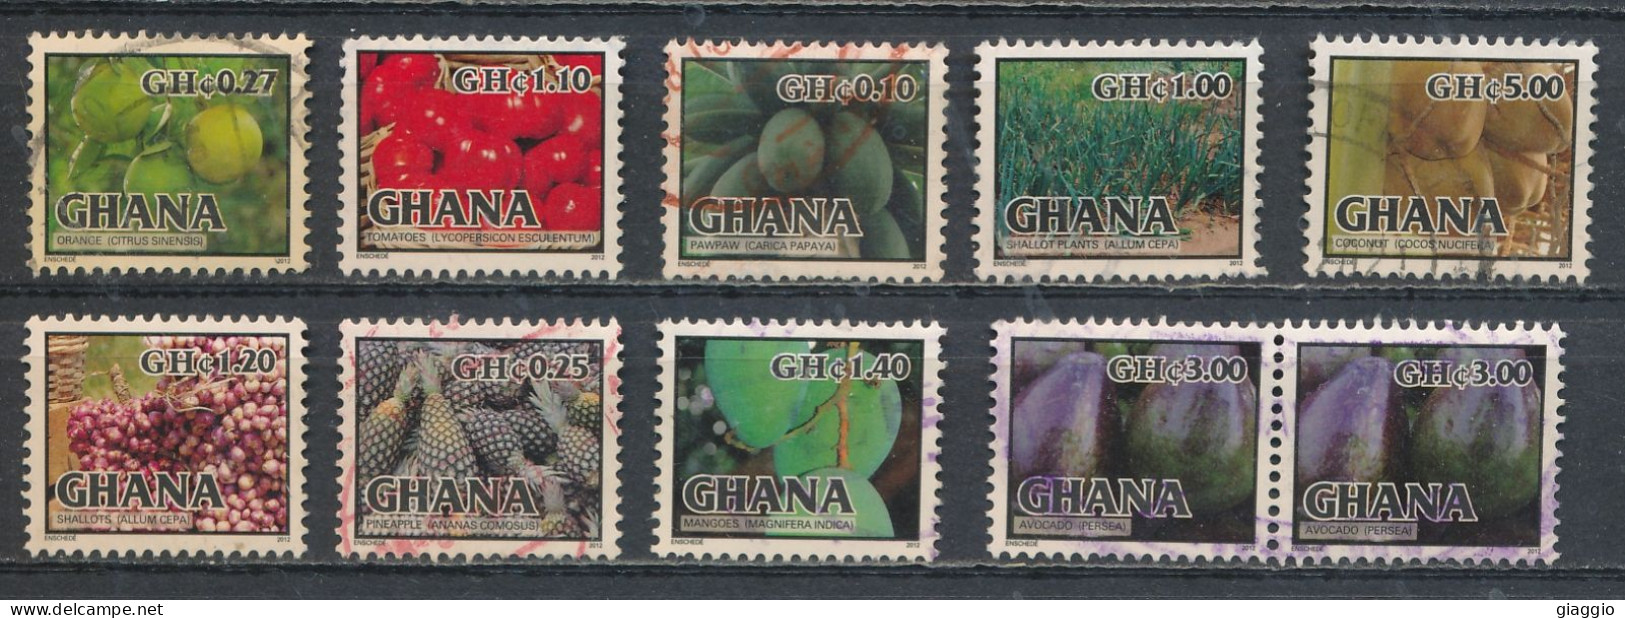 °°° GHANA - MI 4125/34 - 2012 °°° - Ghana (1957-...)